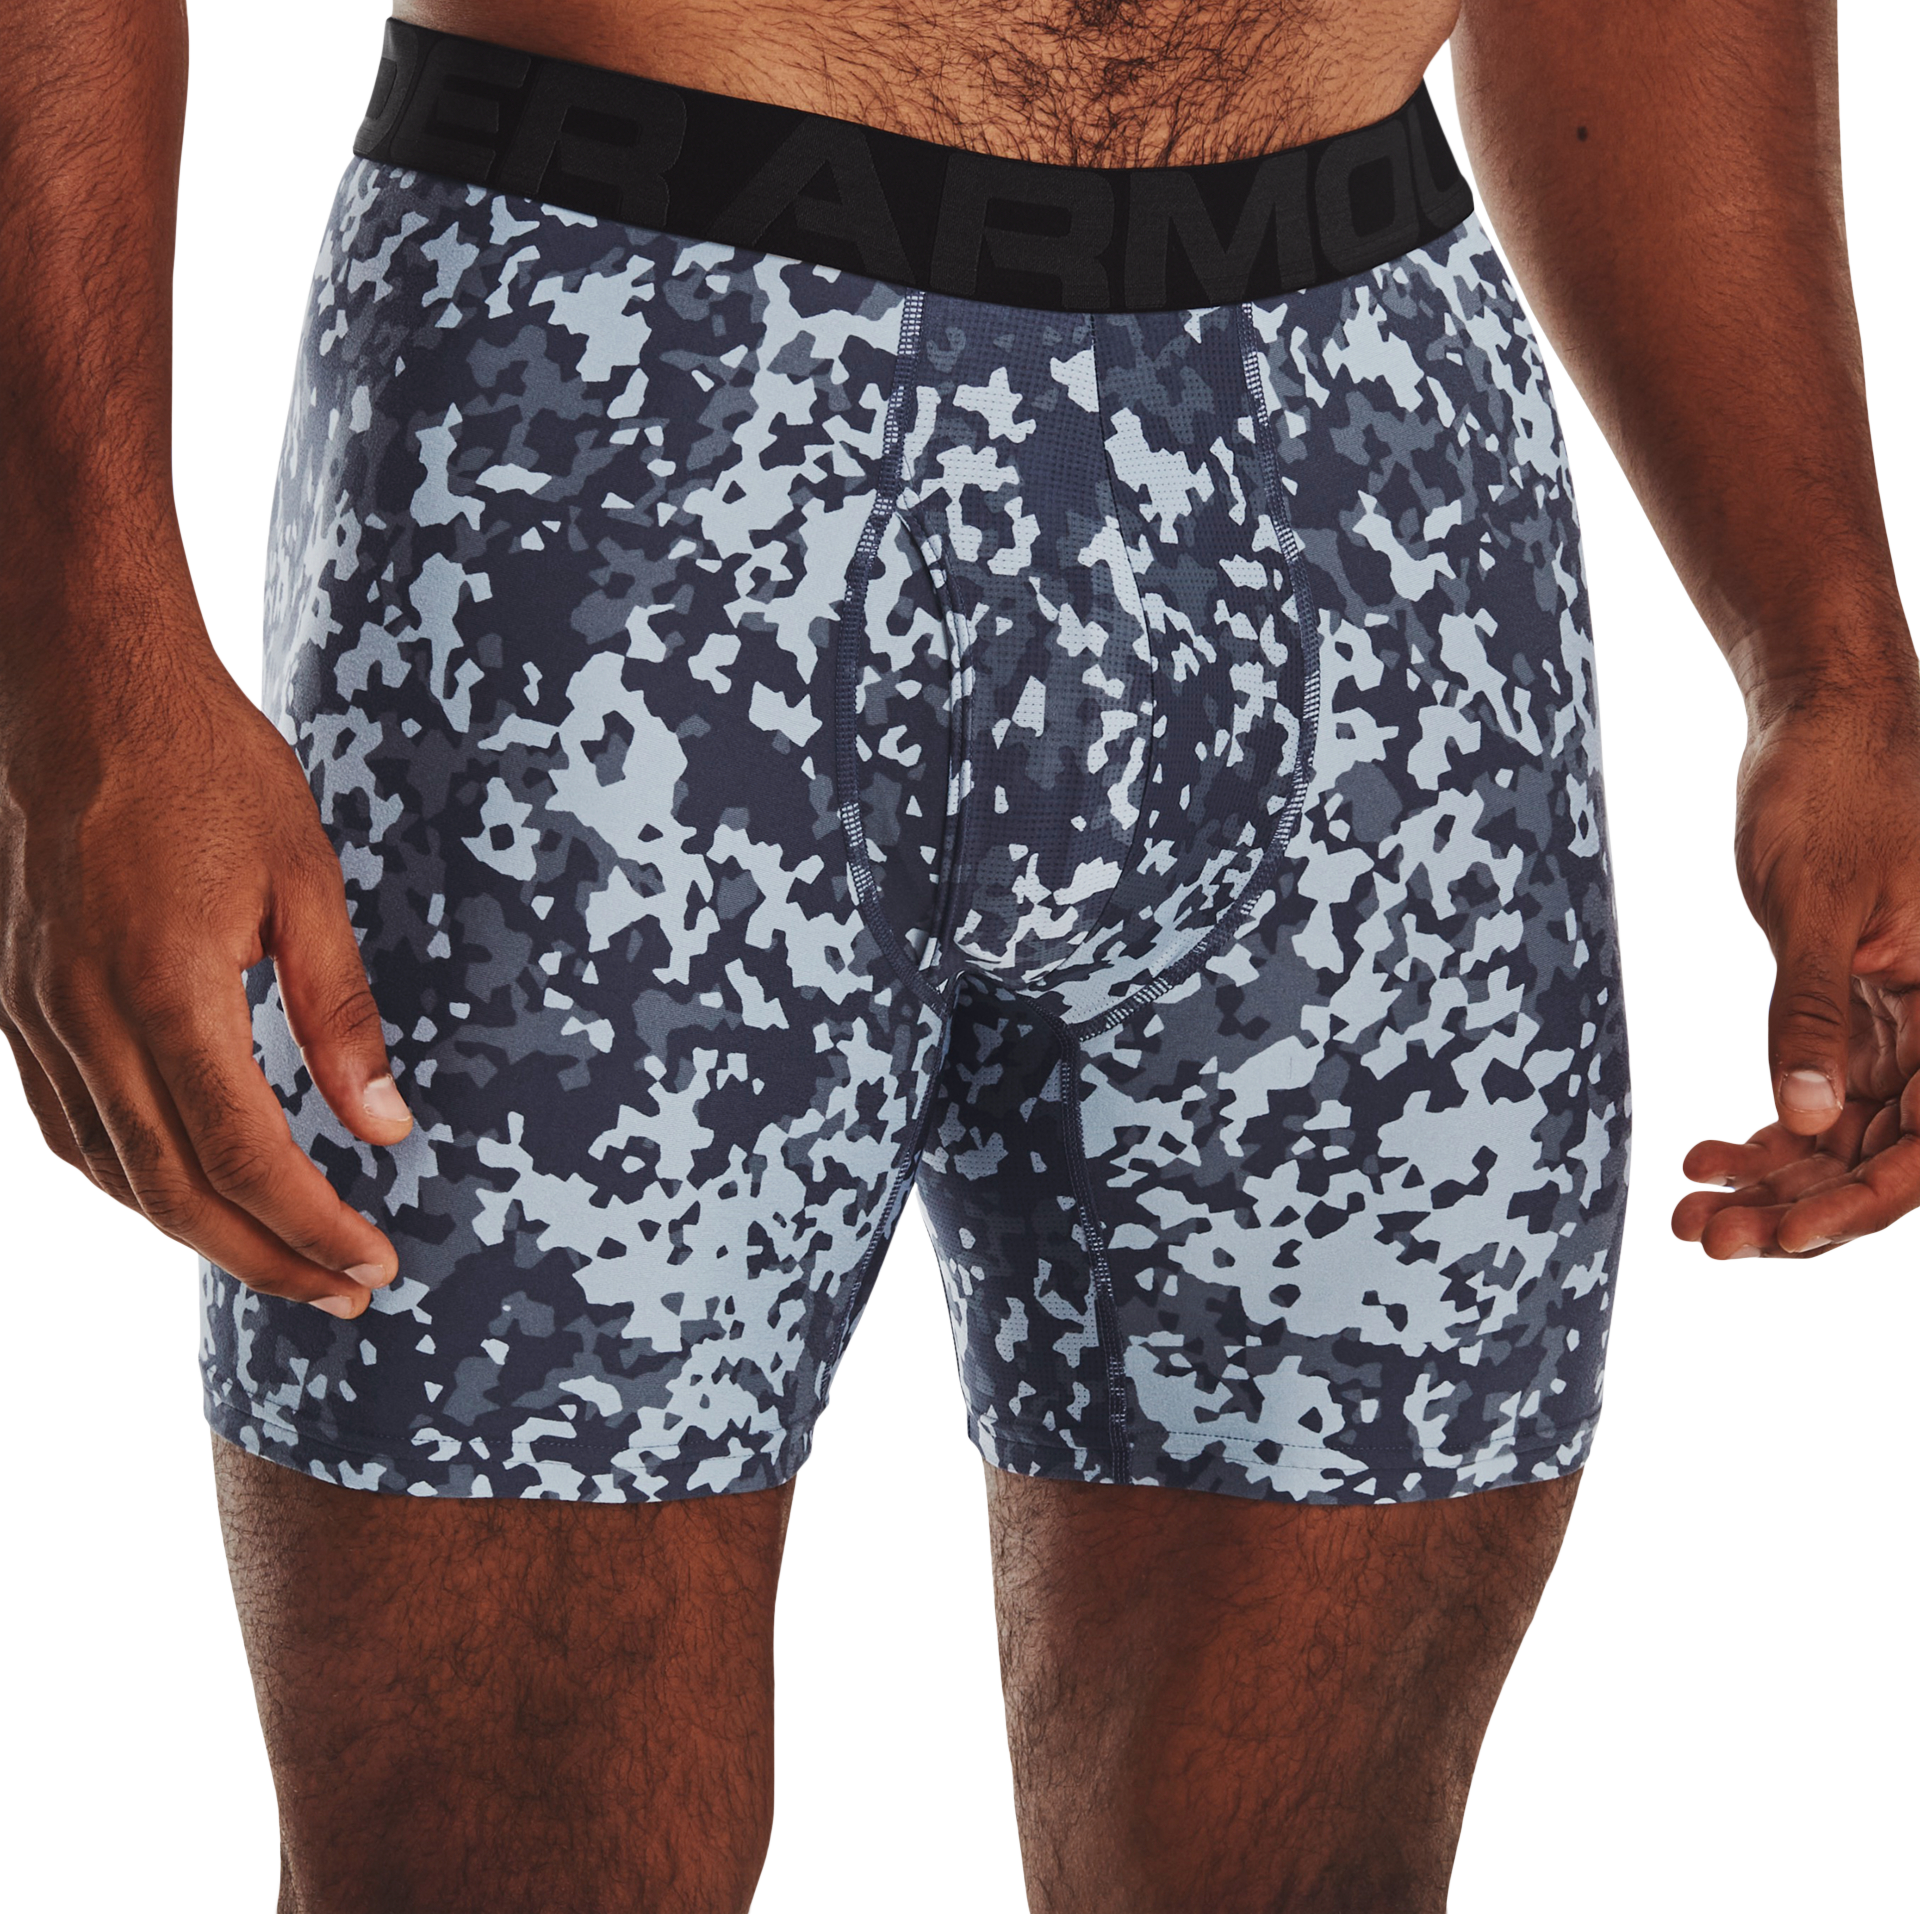 Under Armour Tech 6"" Patterned Boxerjock Shorts for Men - Harbor Blue/Jet Gray - XL